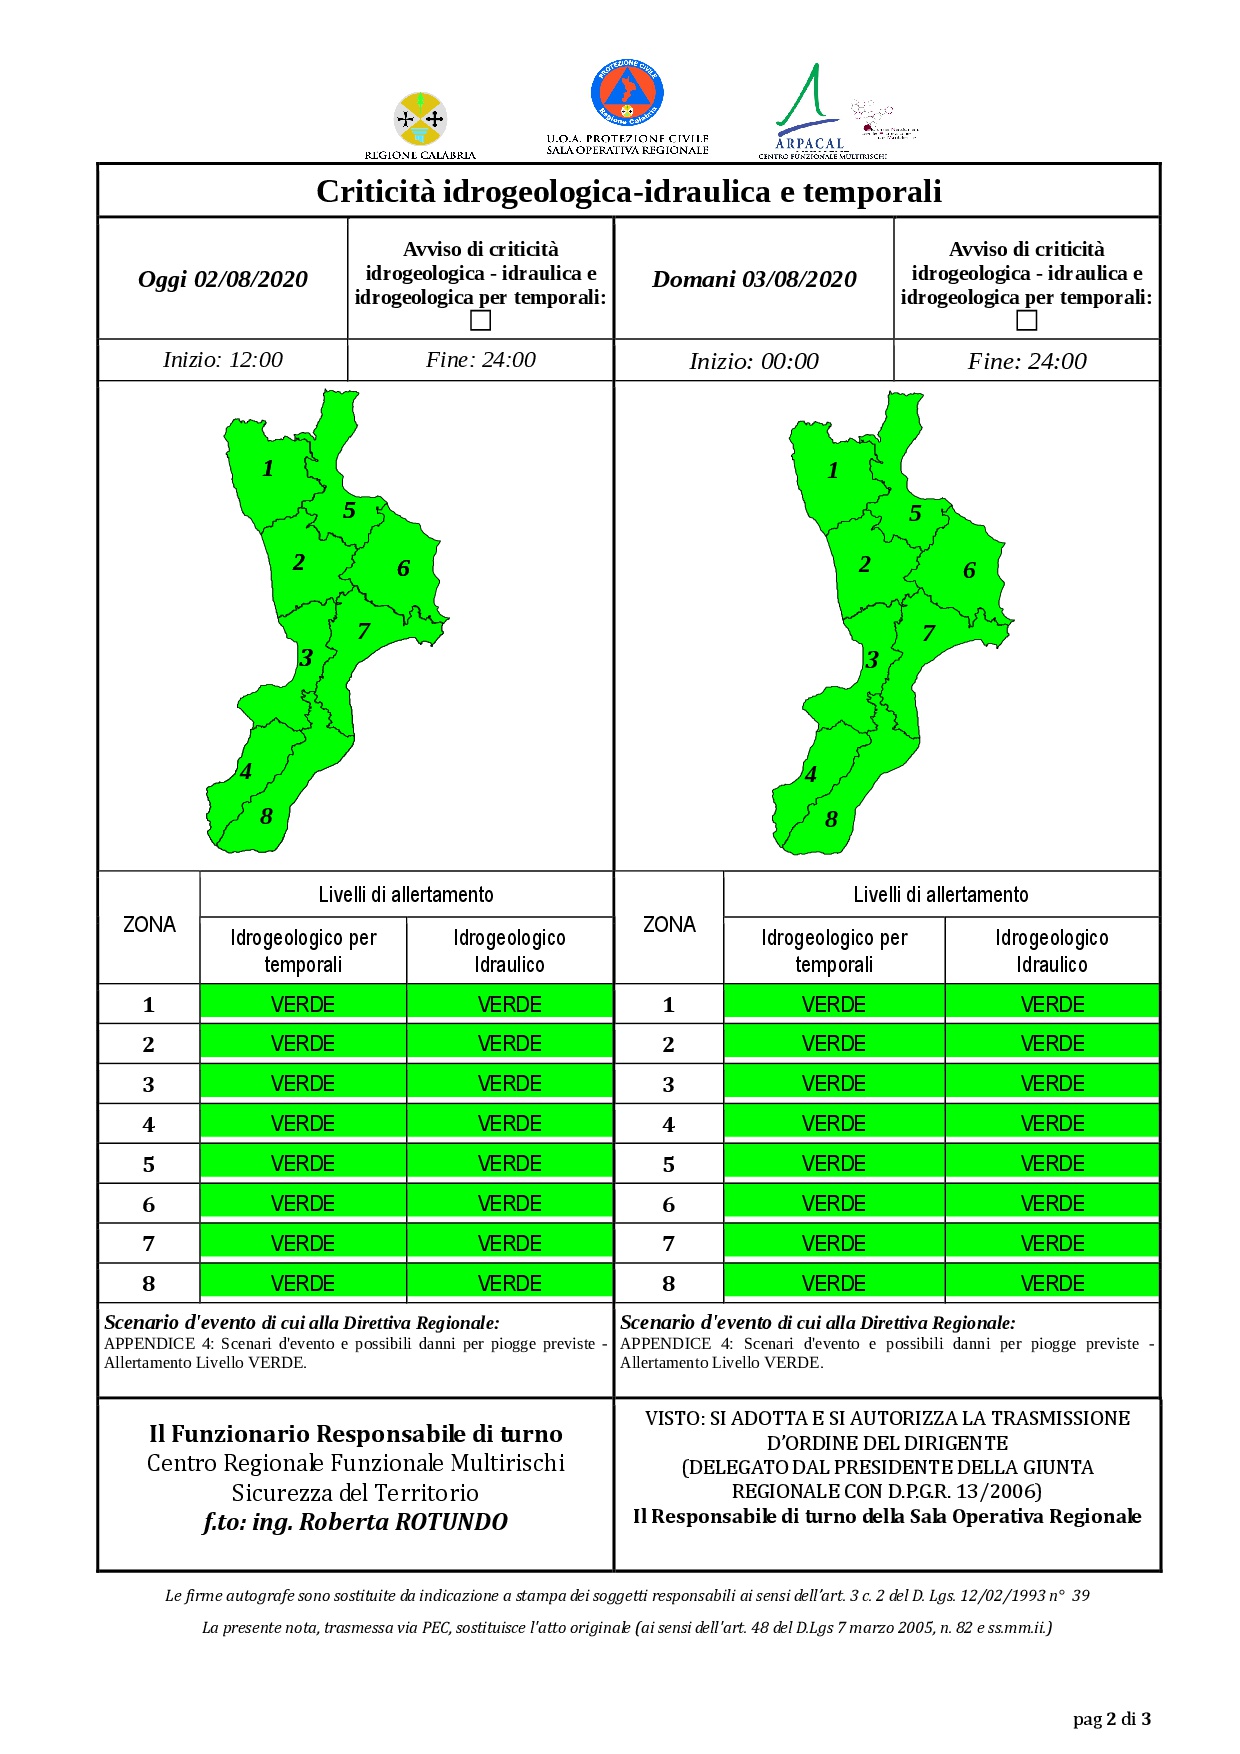 Criticità idrogeologica-idraulica e temporali in Calabria 02-08-2020